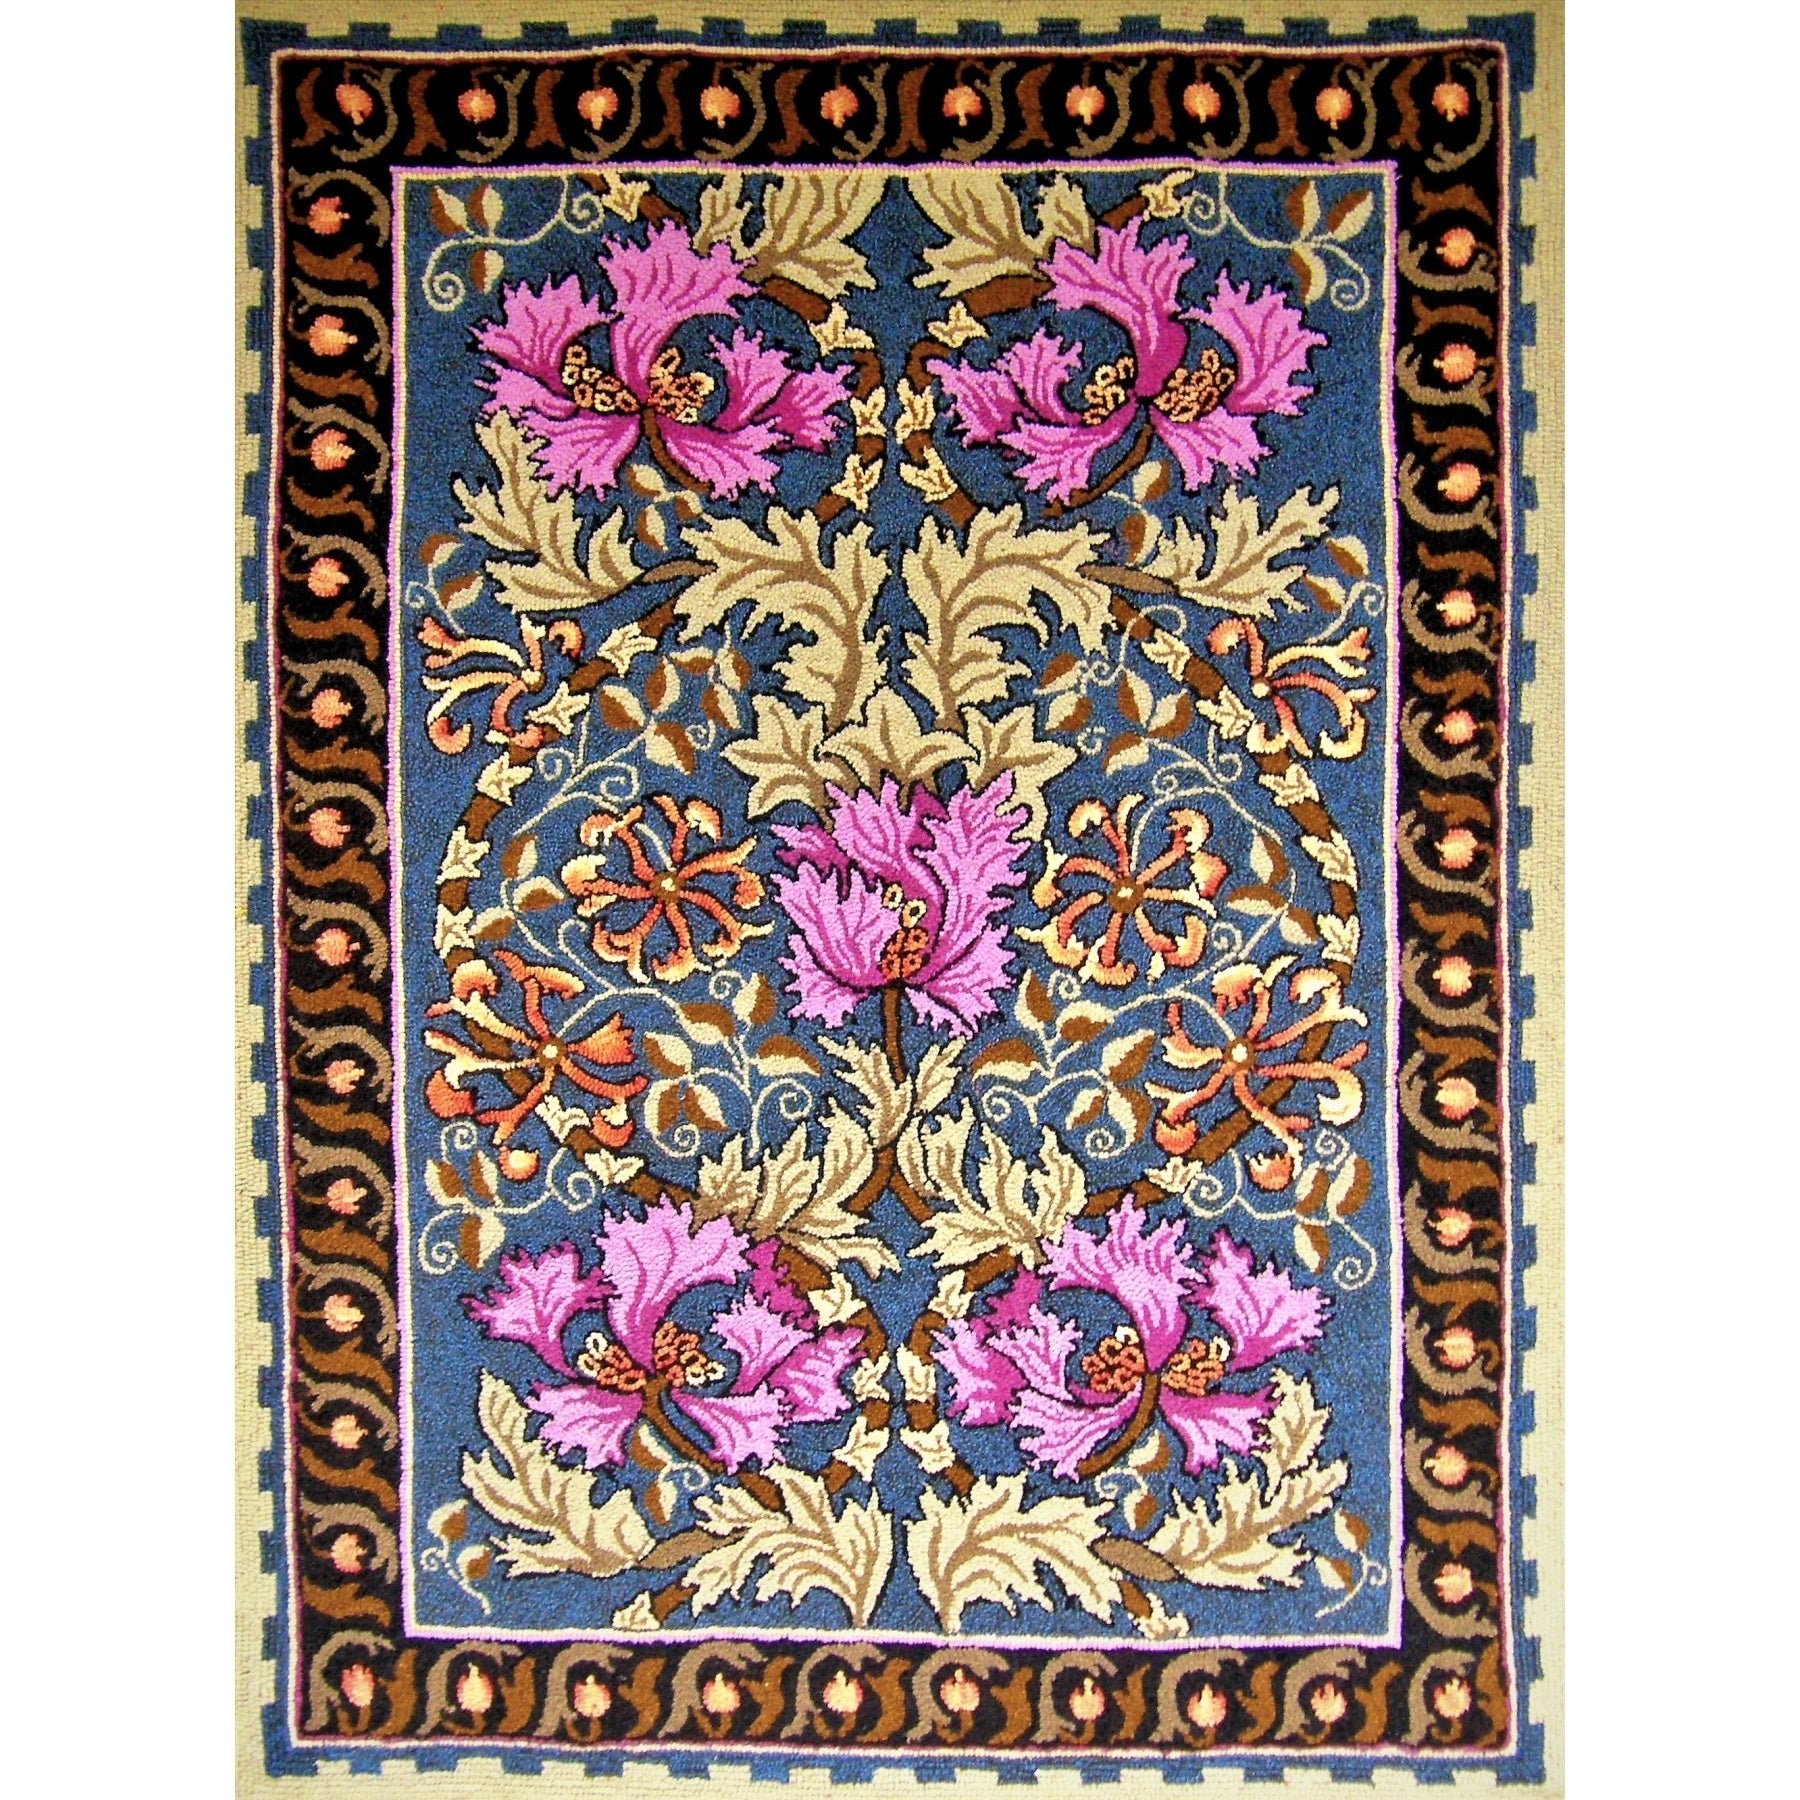 William Morris, rug hooked by Tanya Graham